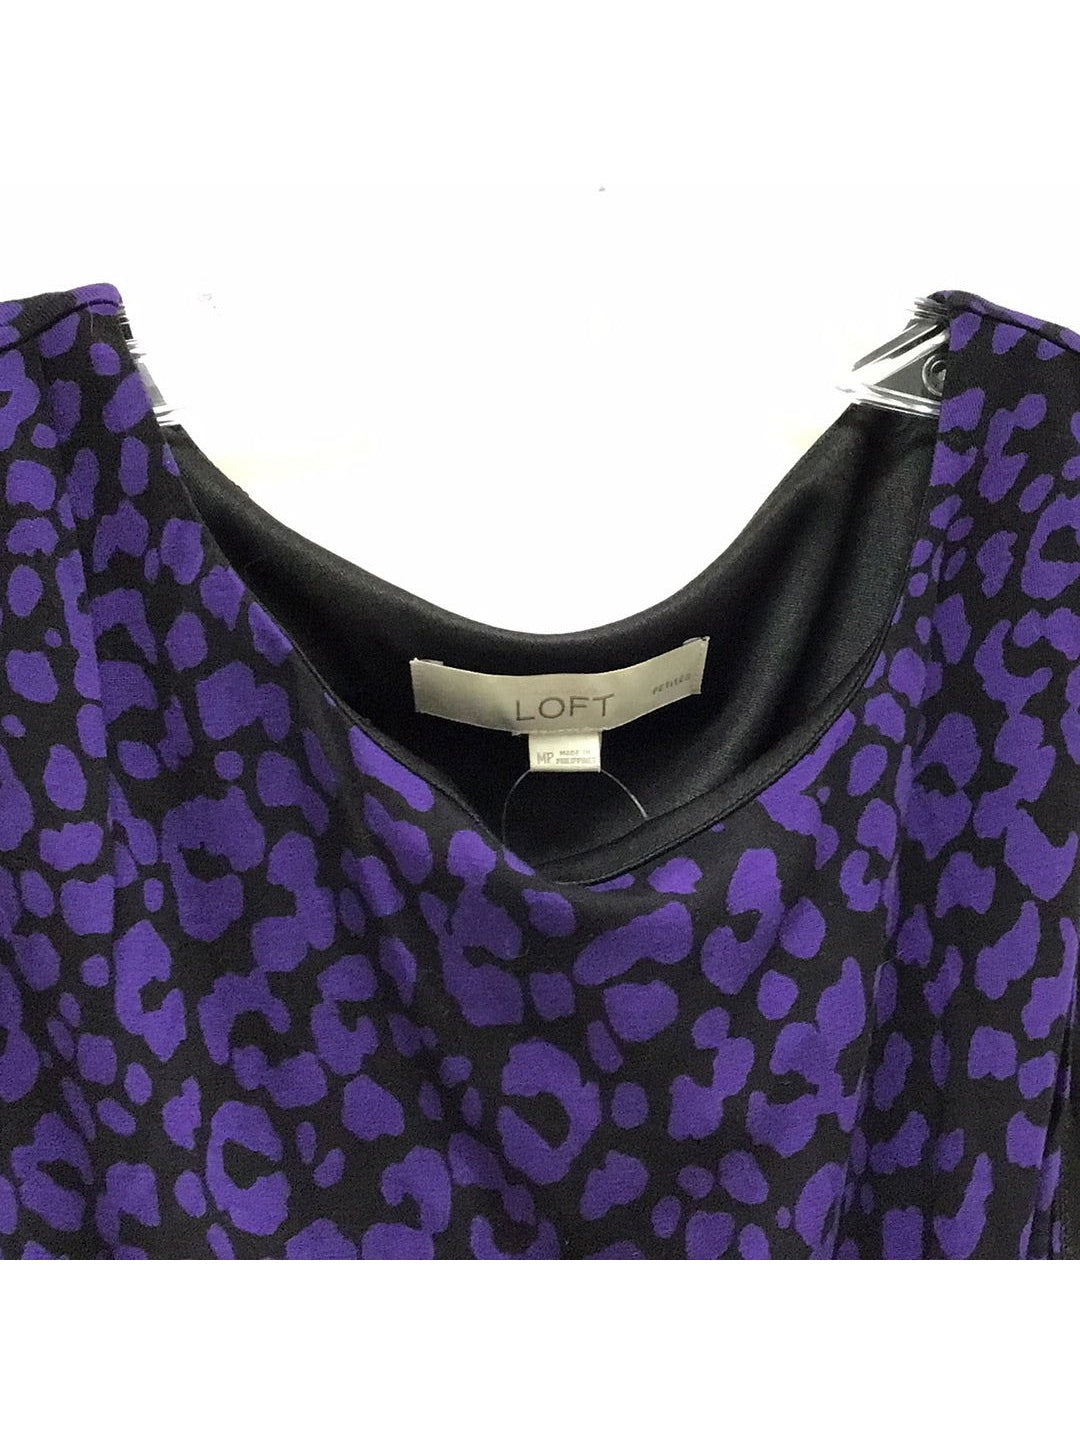 Loft Dress Women's Purple Medium - The Kennedy Collective Thrift - 